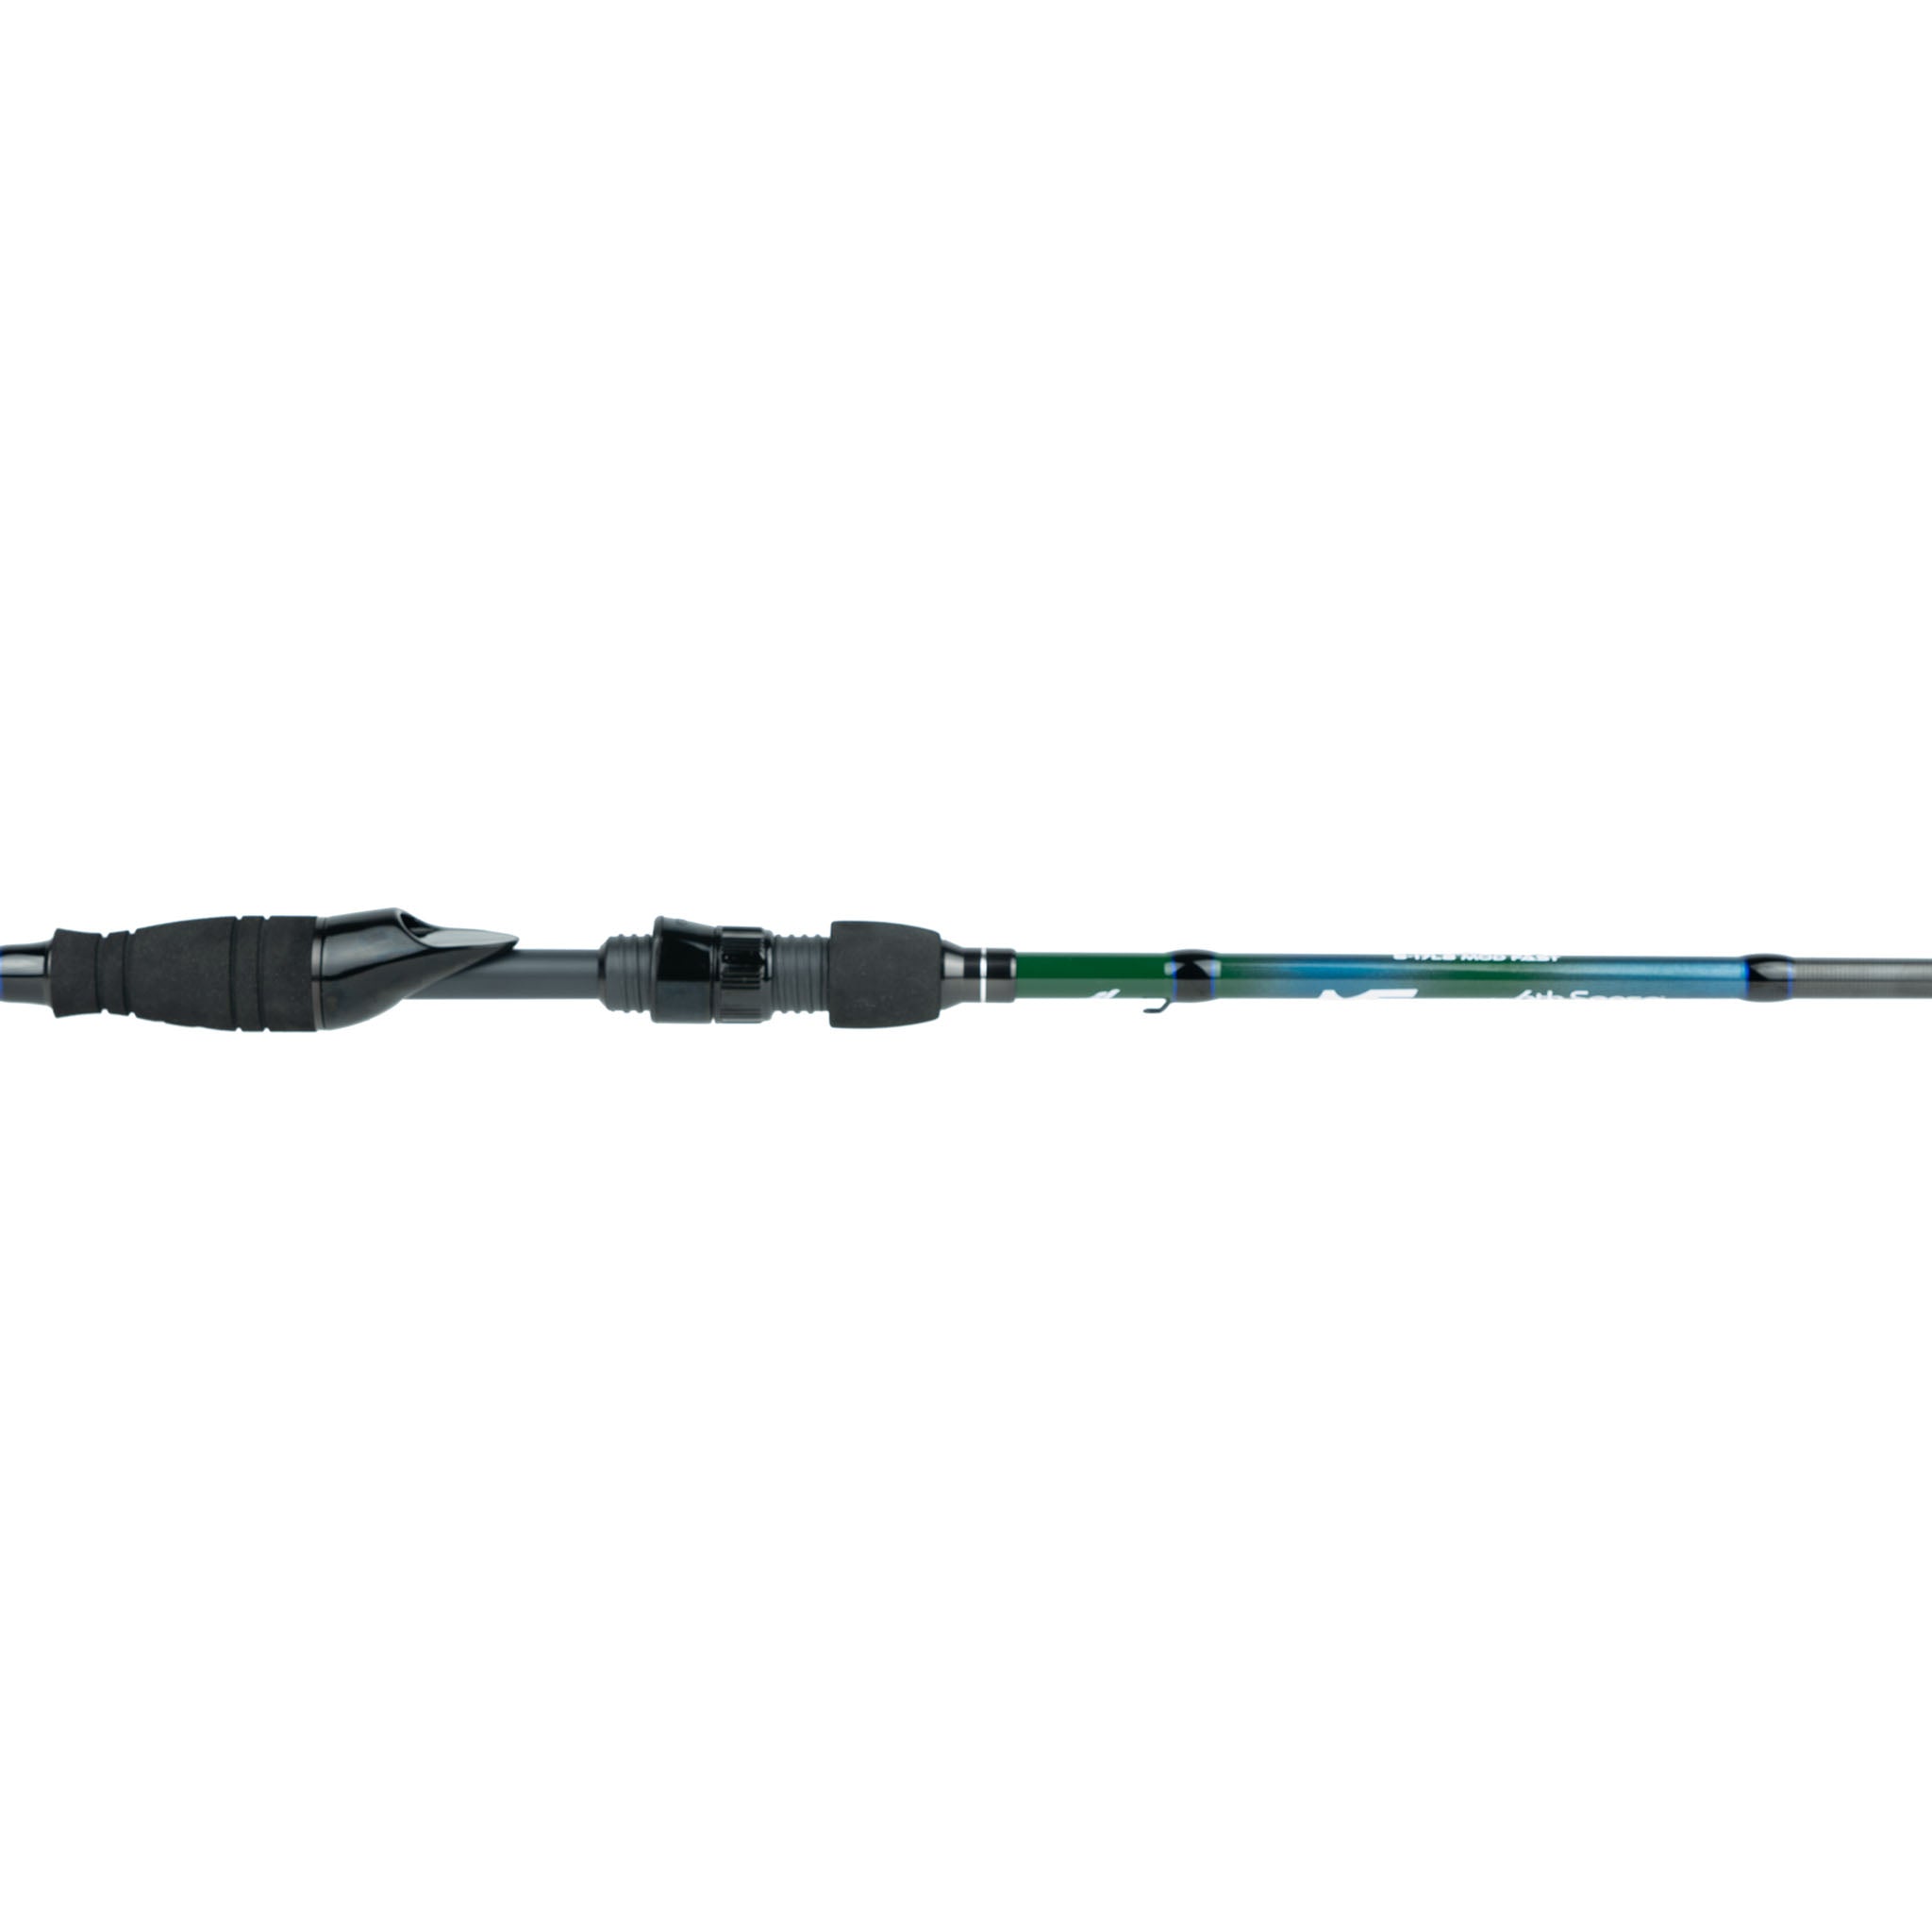 6th Sense Fishing - Milliken Series Rod - 7'4 Medium, Mod Fast